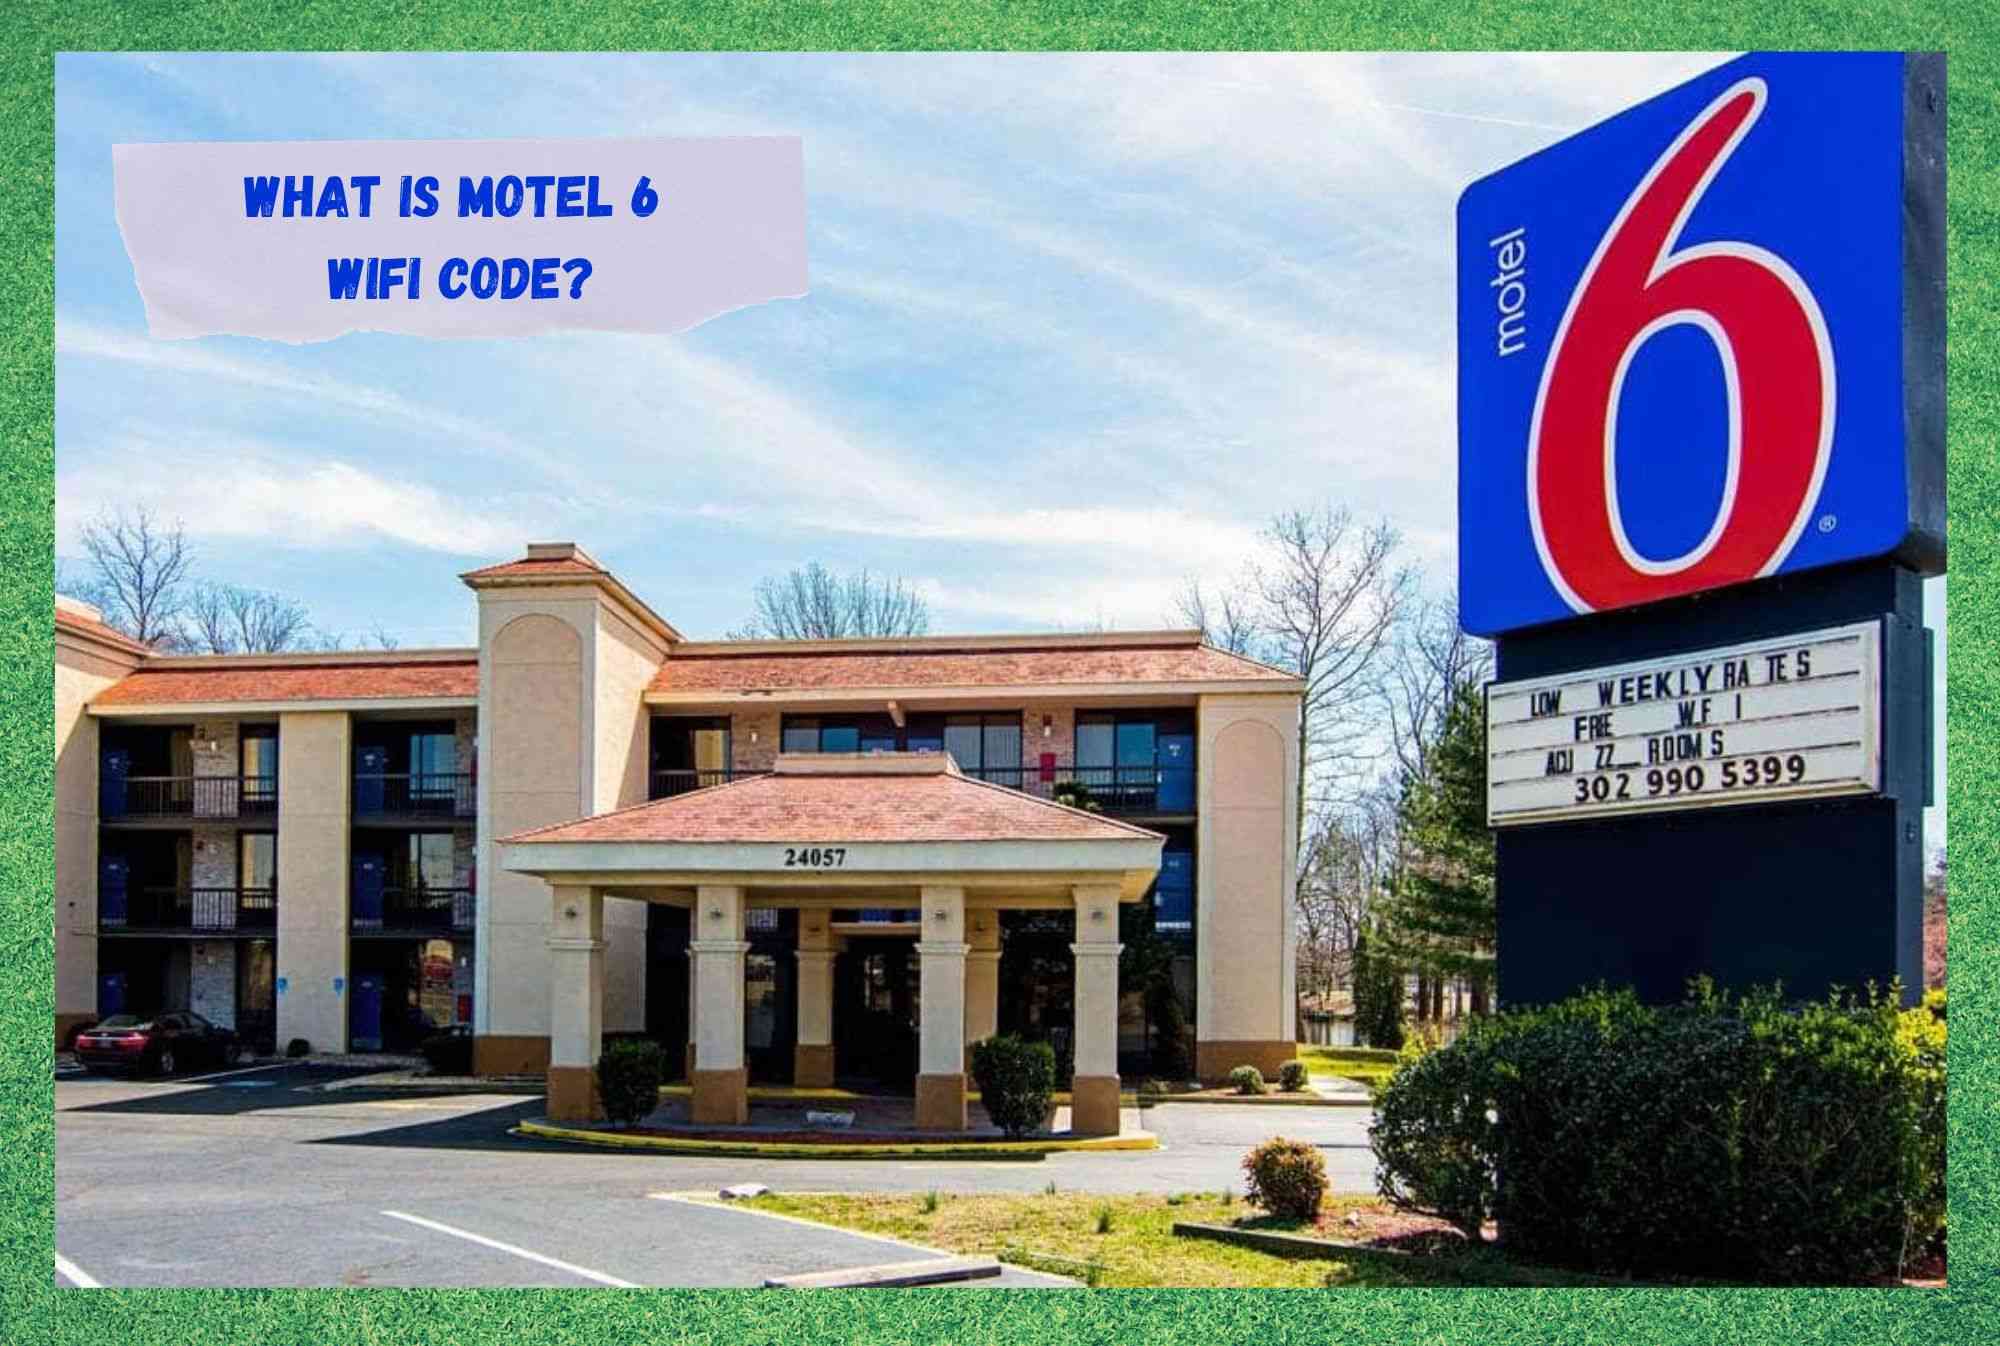 Што такое код WiFi Motel 6?